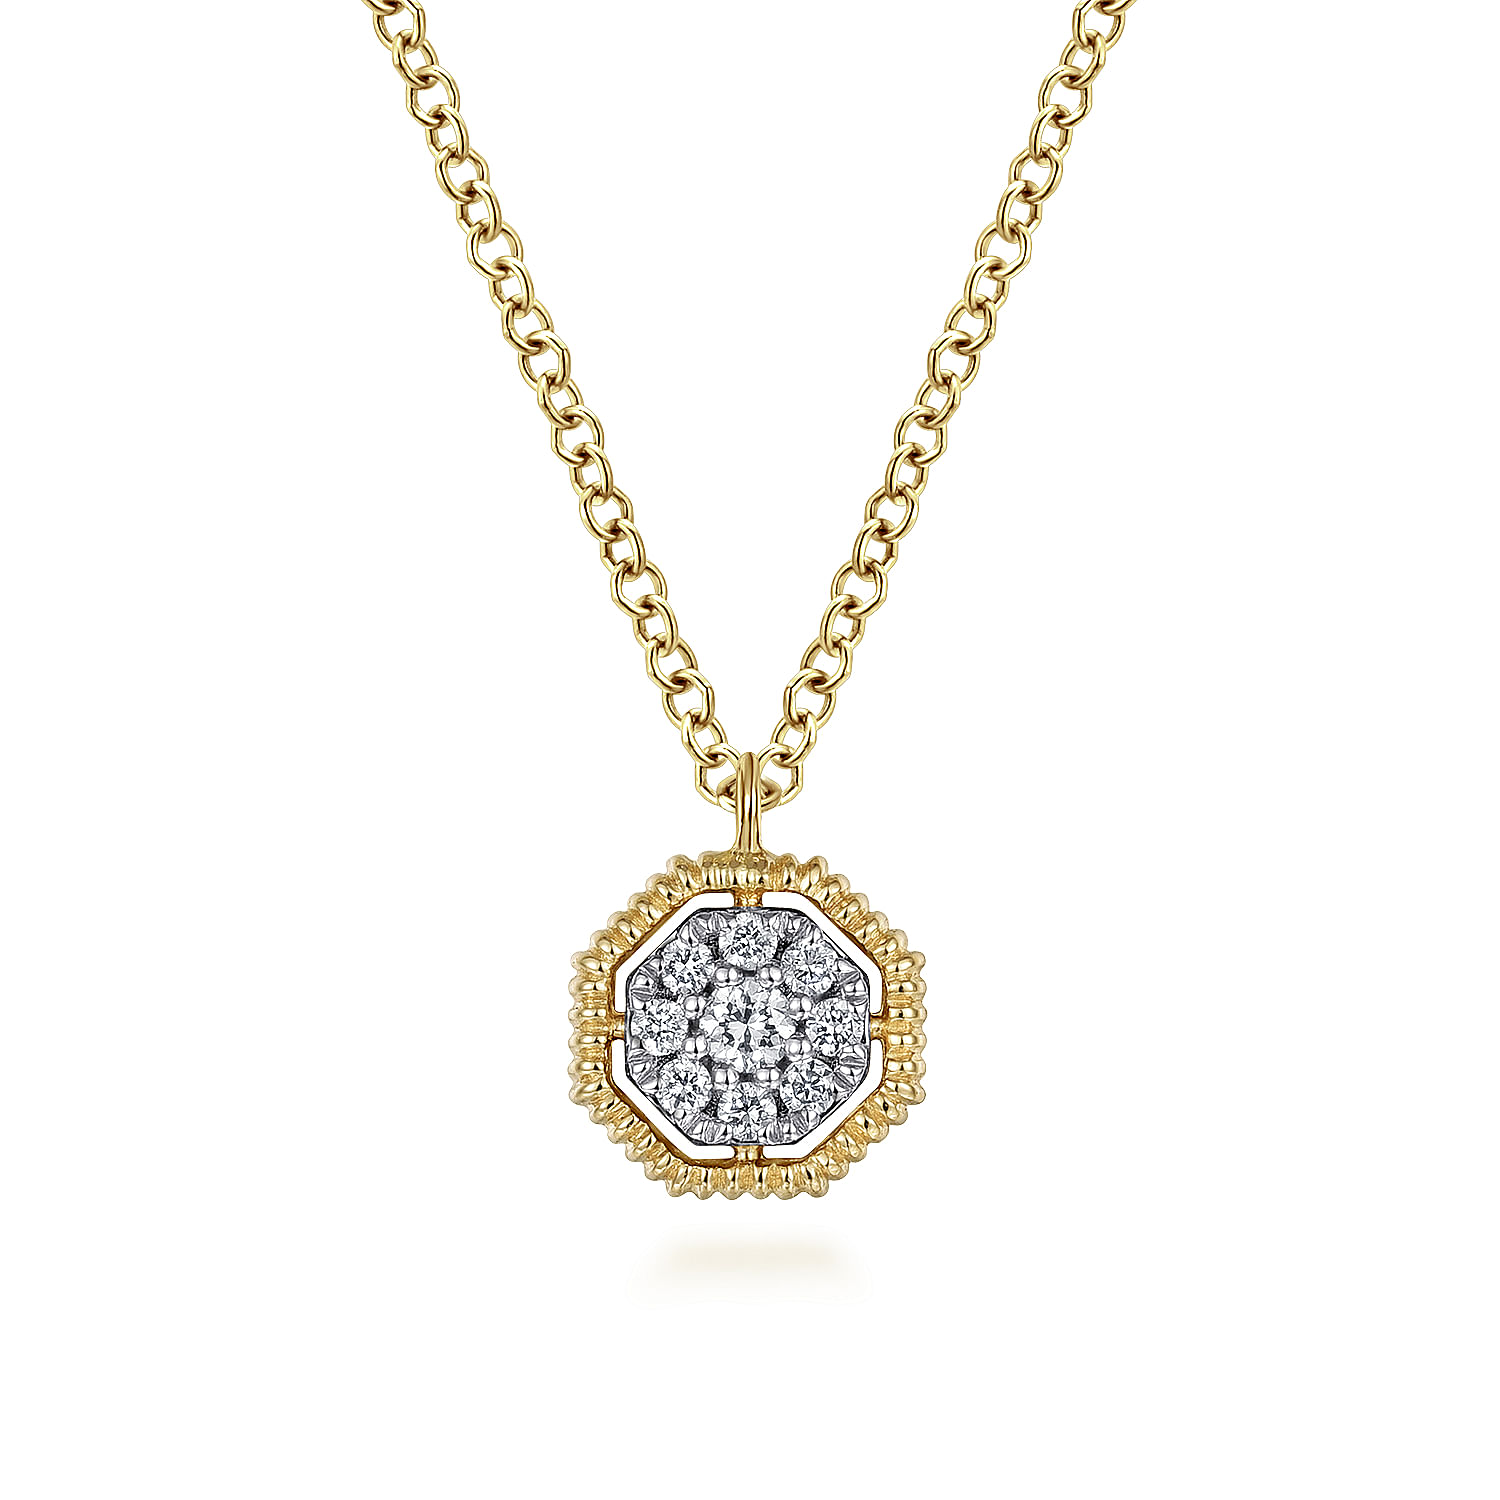 14K-Yellow-Gold-Octagonal-Pave-Diamond-Pendant-Necklace1